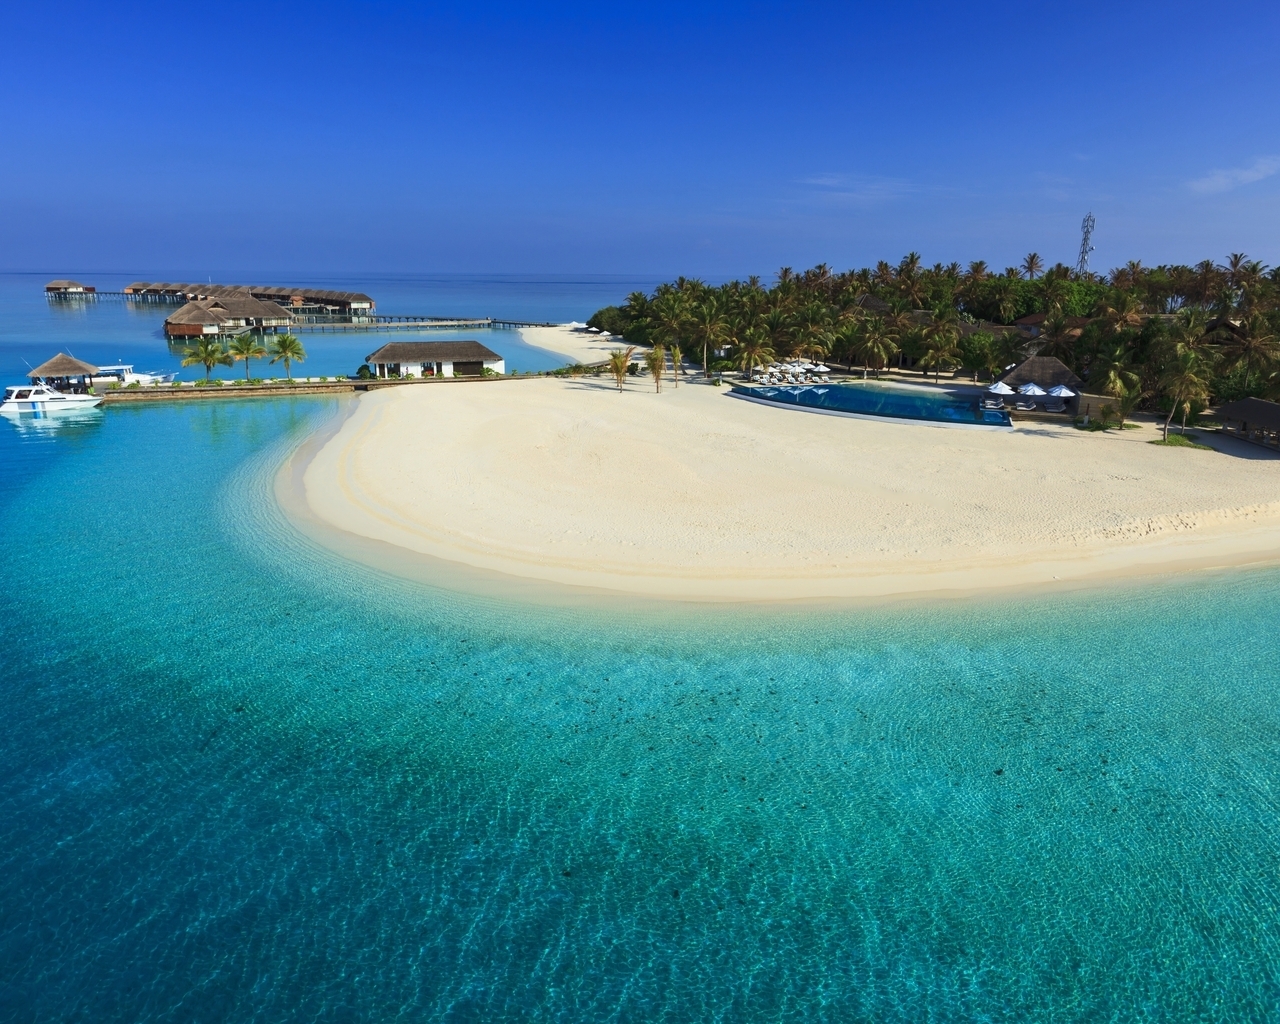 Maldives Luxury Resort for 1280 x 1024 resolution